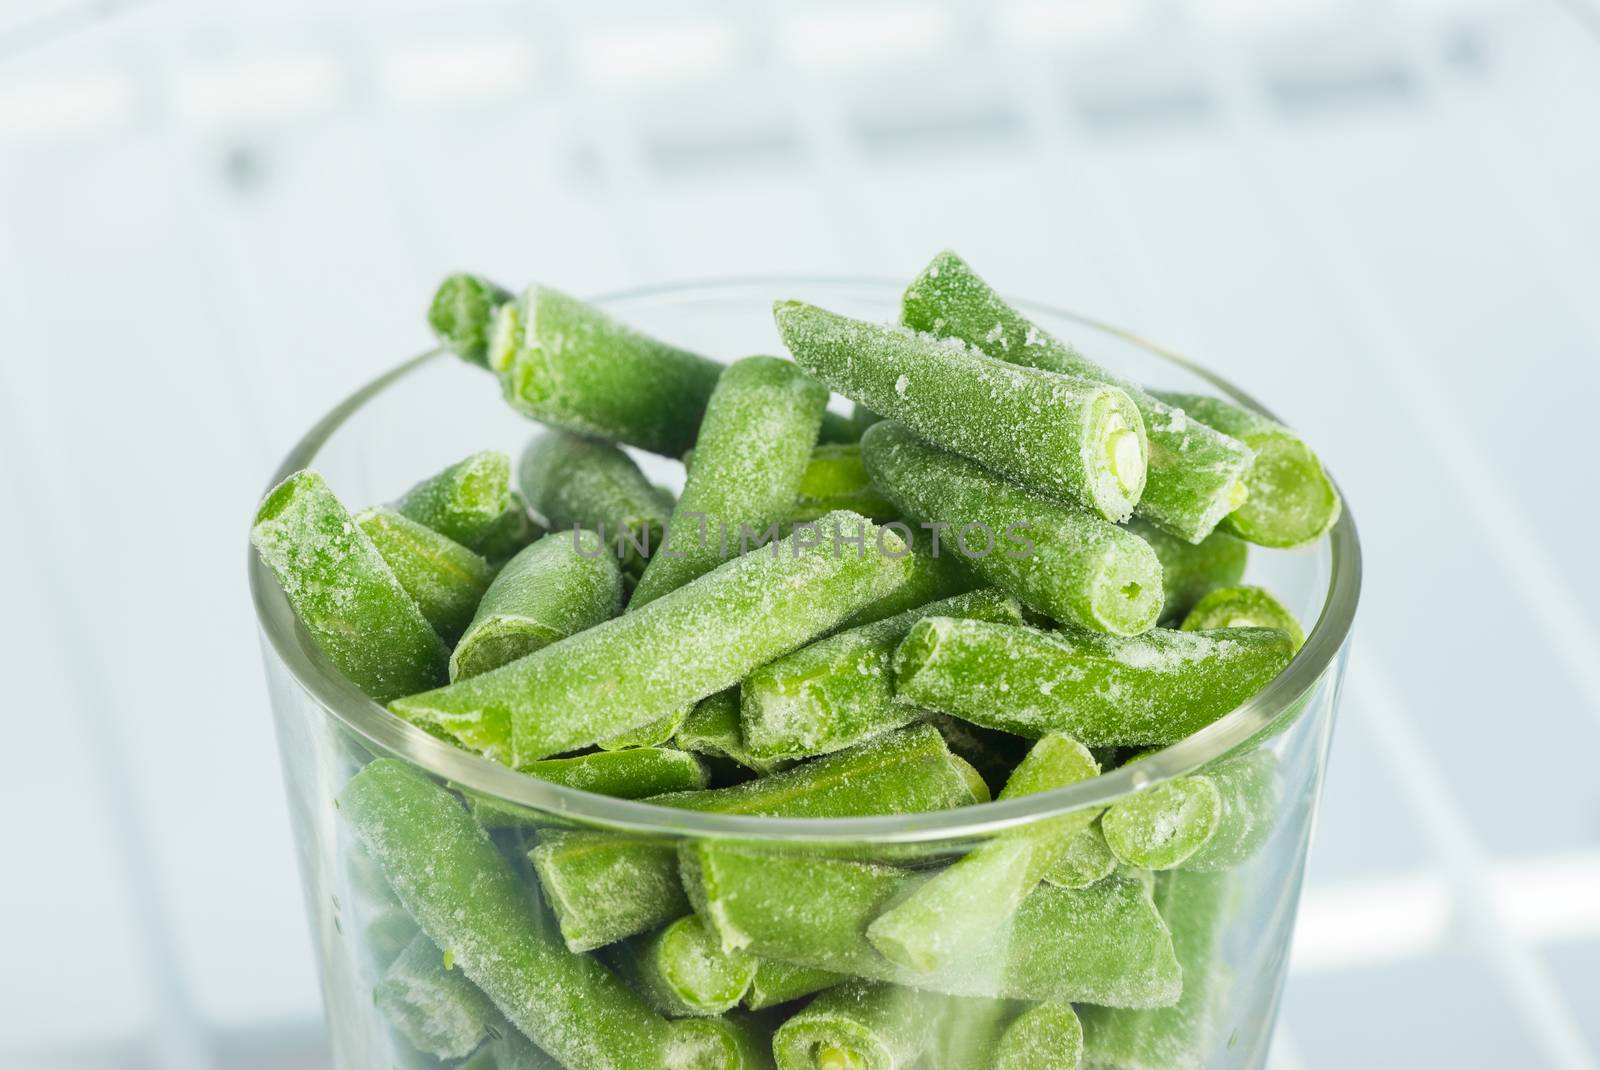 Frozen green beans in freezer by iprachenko